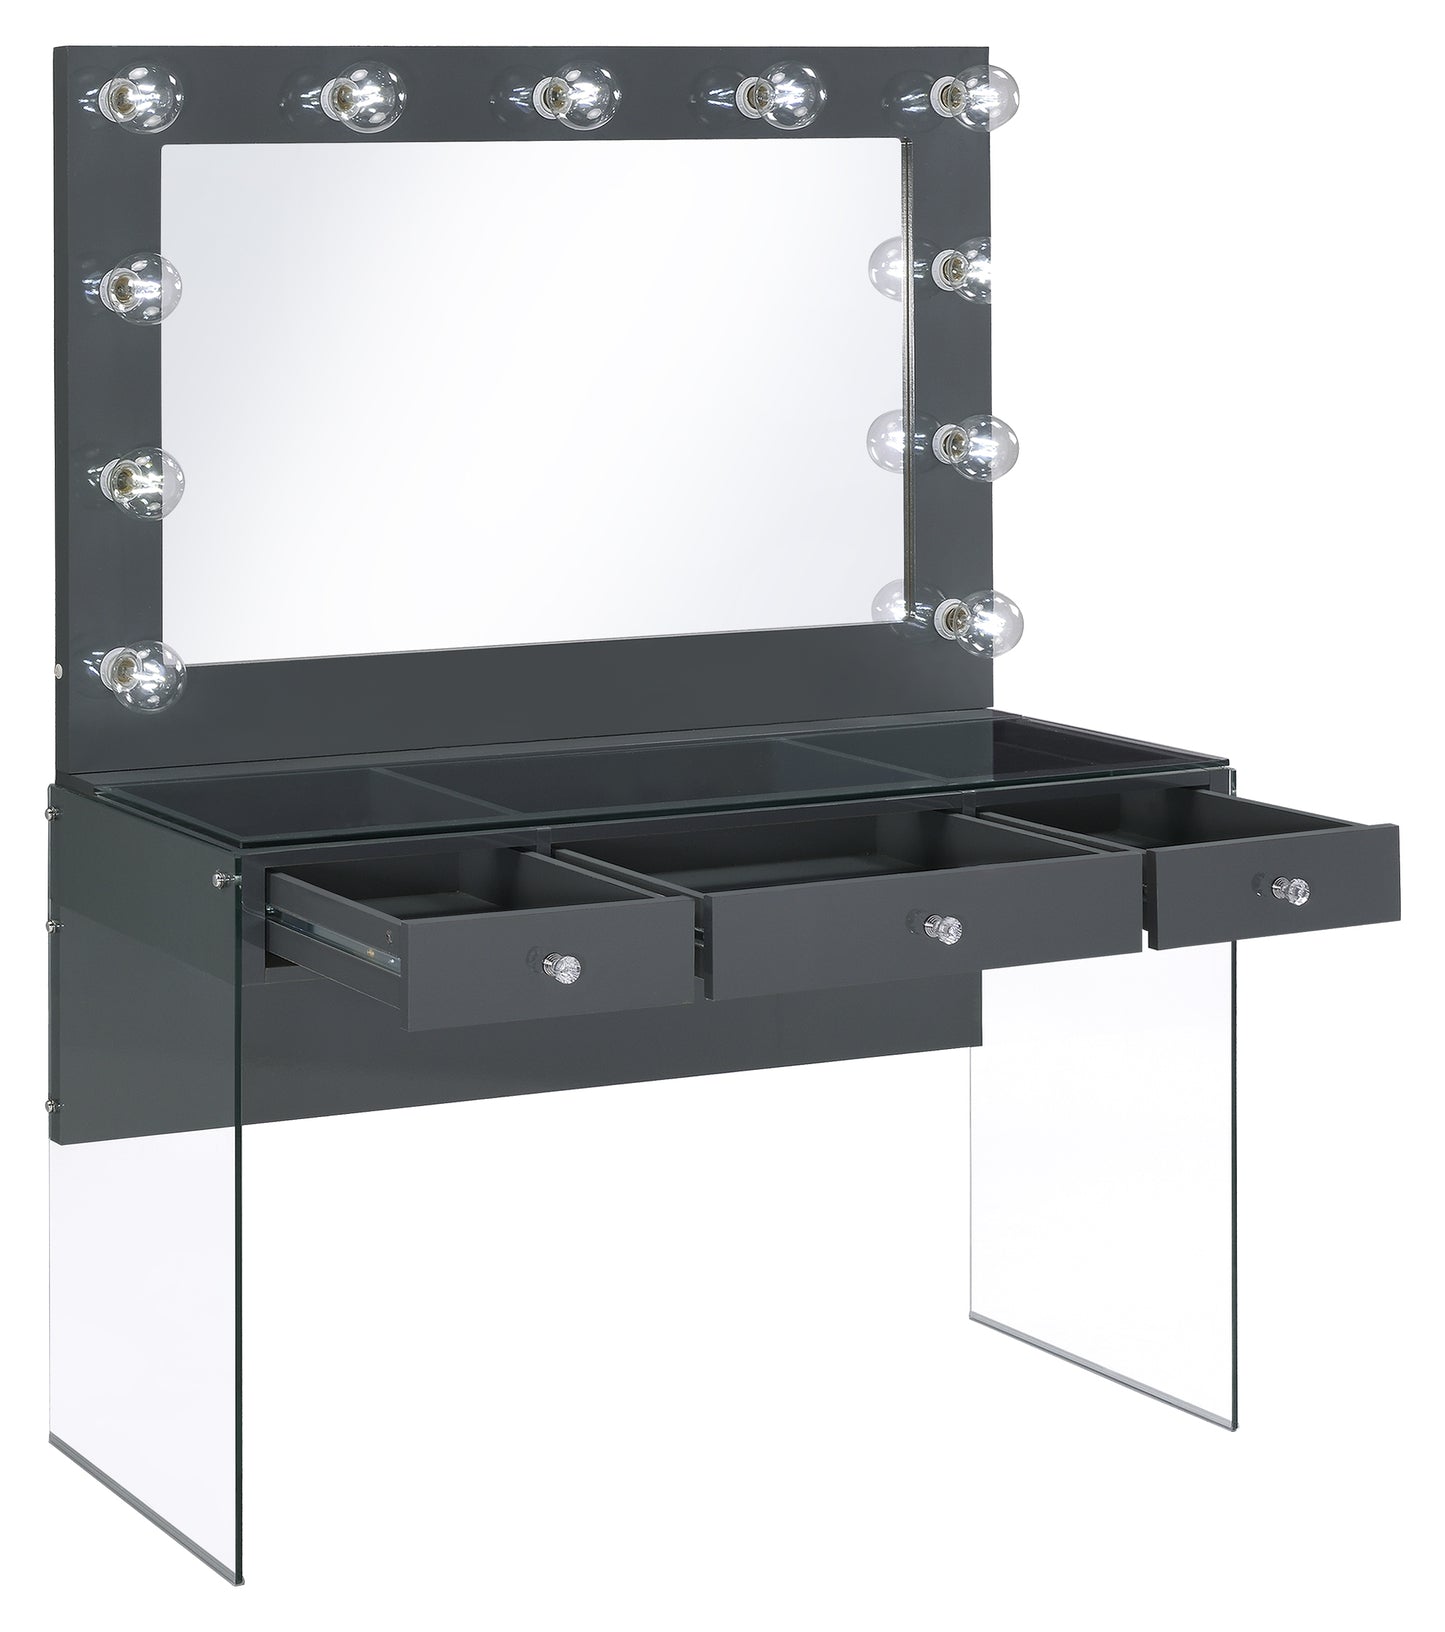 Afshan 3-drawer Vanity Set with Lighting Grey High Gloss